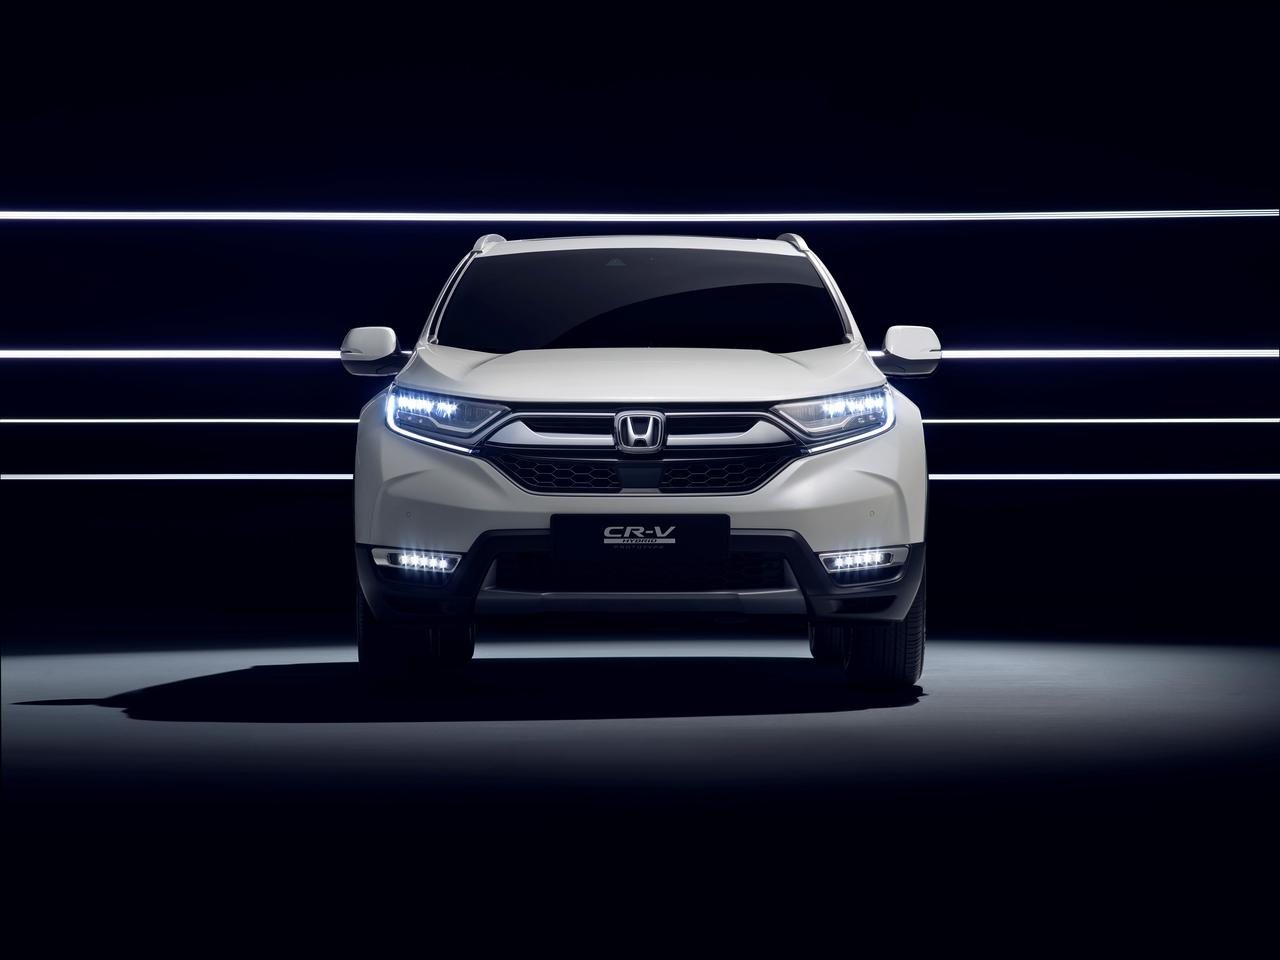 Honda CR-V 2017 front view